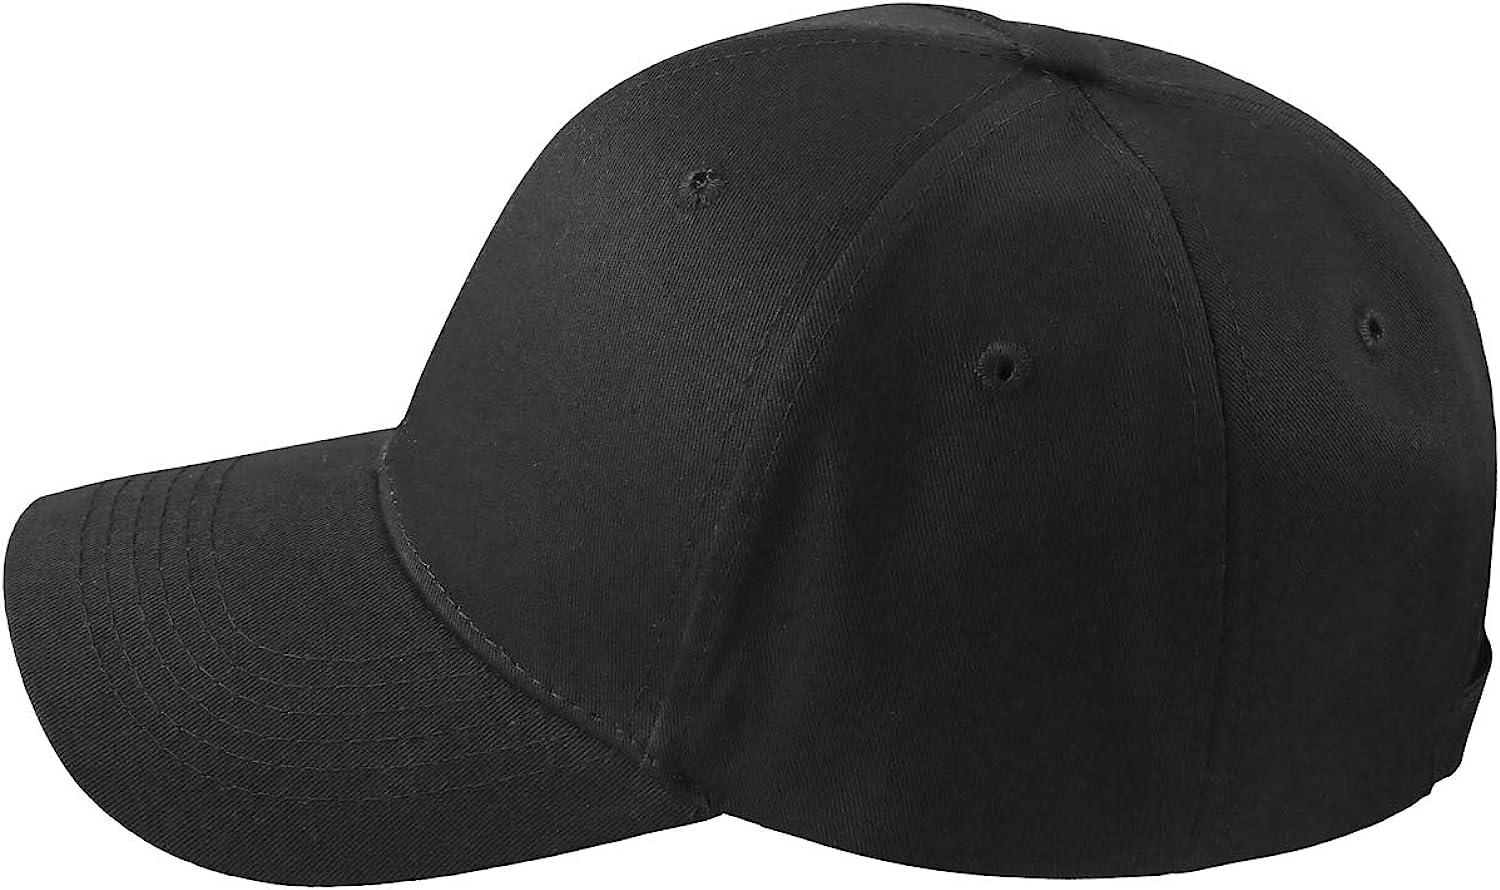 Baseball Cap Men Women Adjustable Plain Dad Hats Low Profile Solid